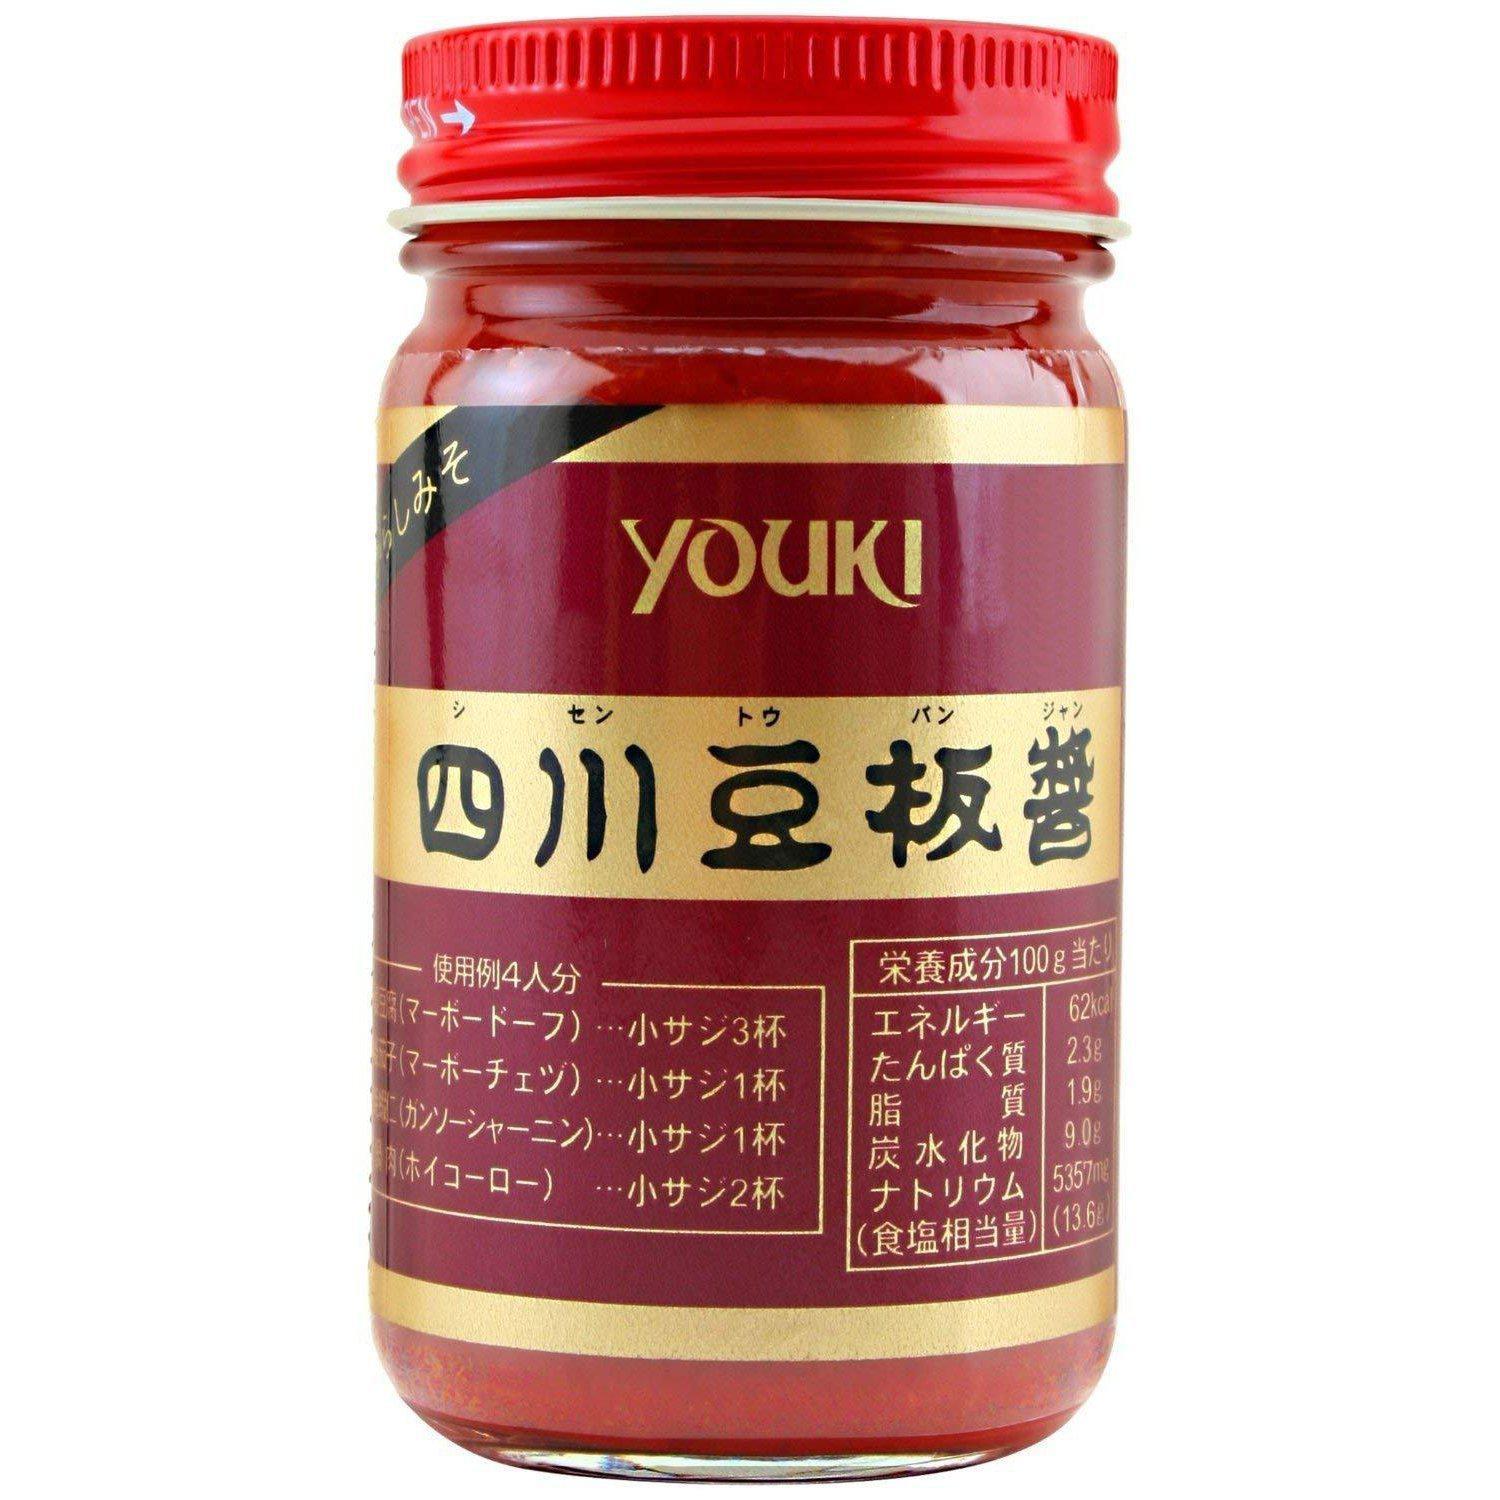 Youki Sichuan Doubanjiang Hot Chili Bean Sauce 130g, Japanese Taste